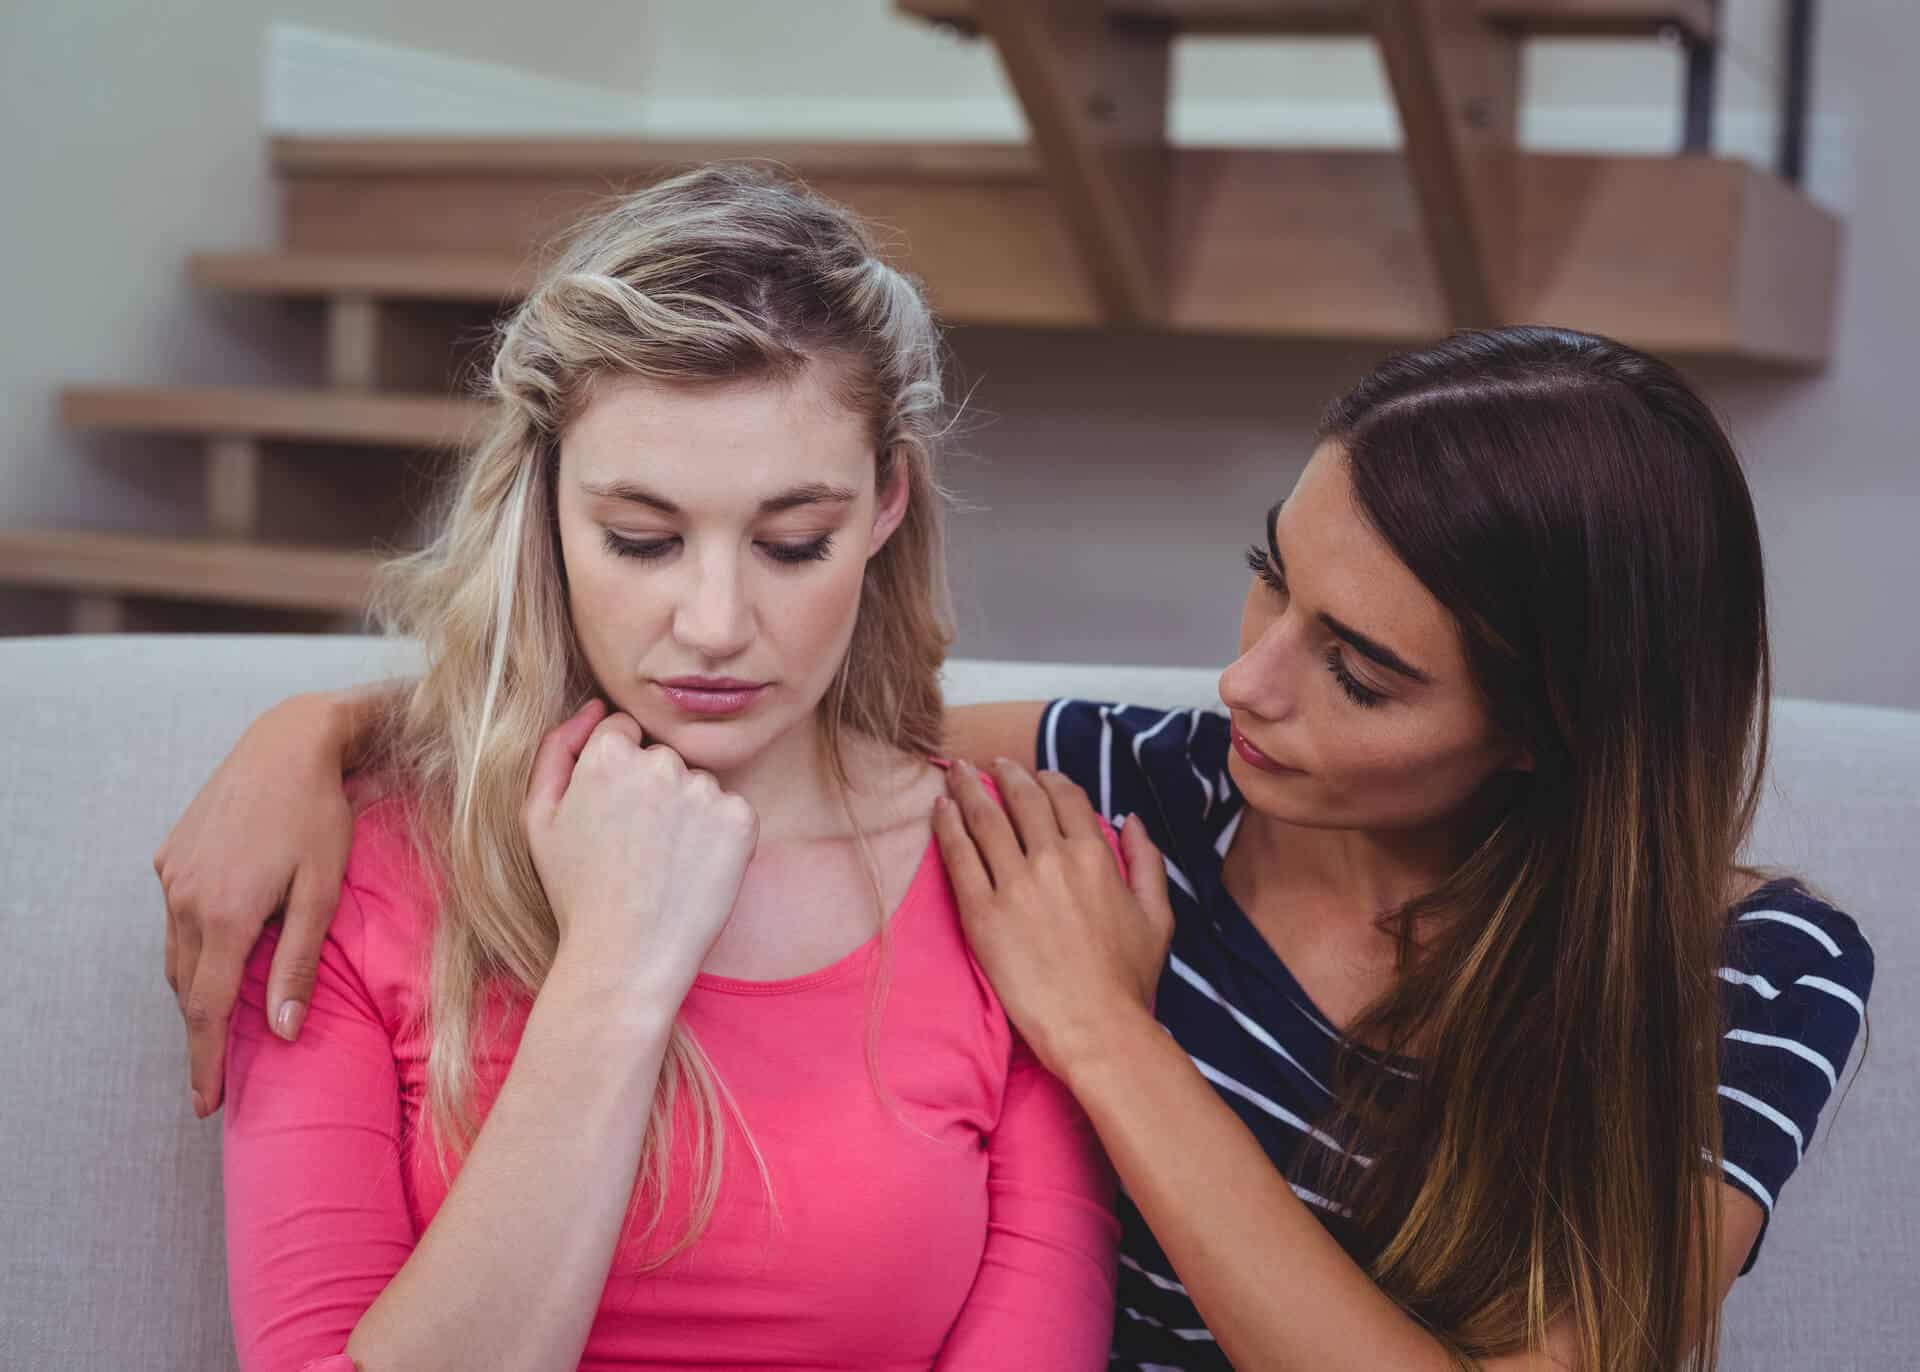 woman comforting an upset friend